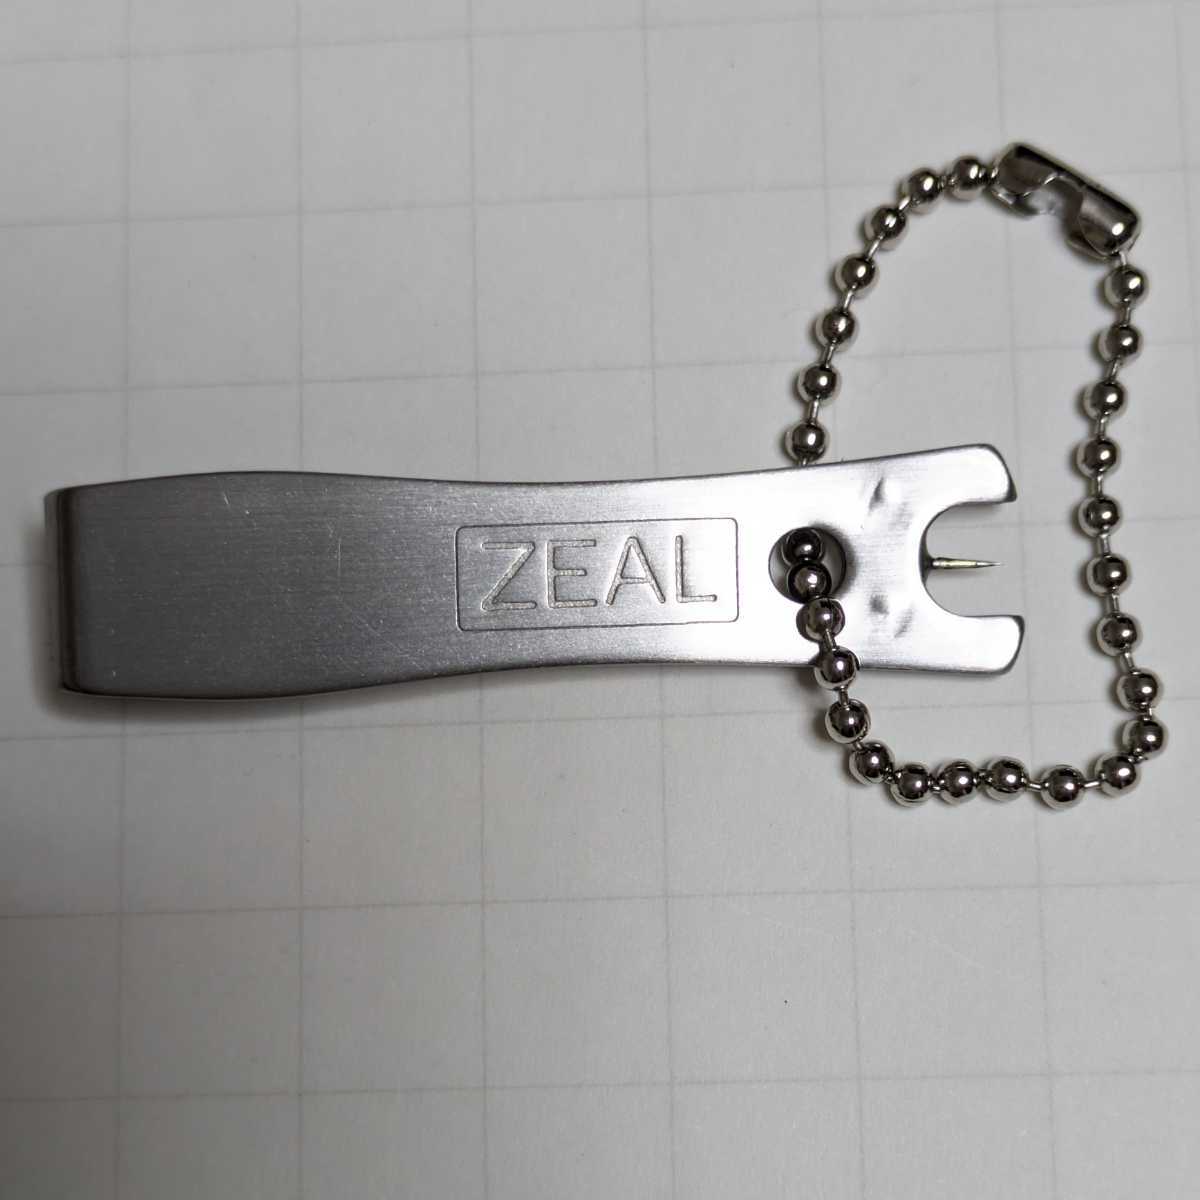 zi-ru line cutter 3 piece set / unused /ZEAL